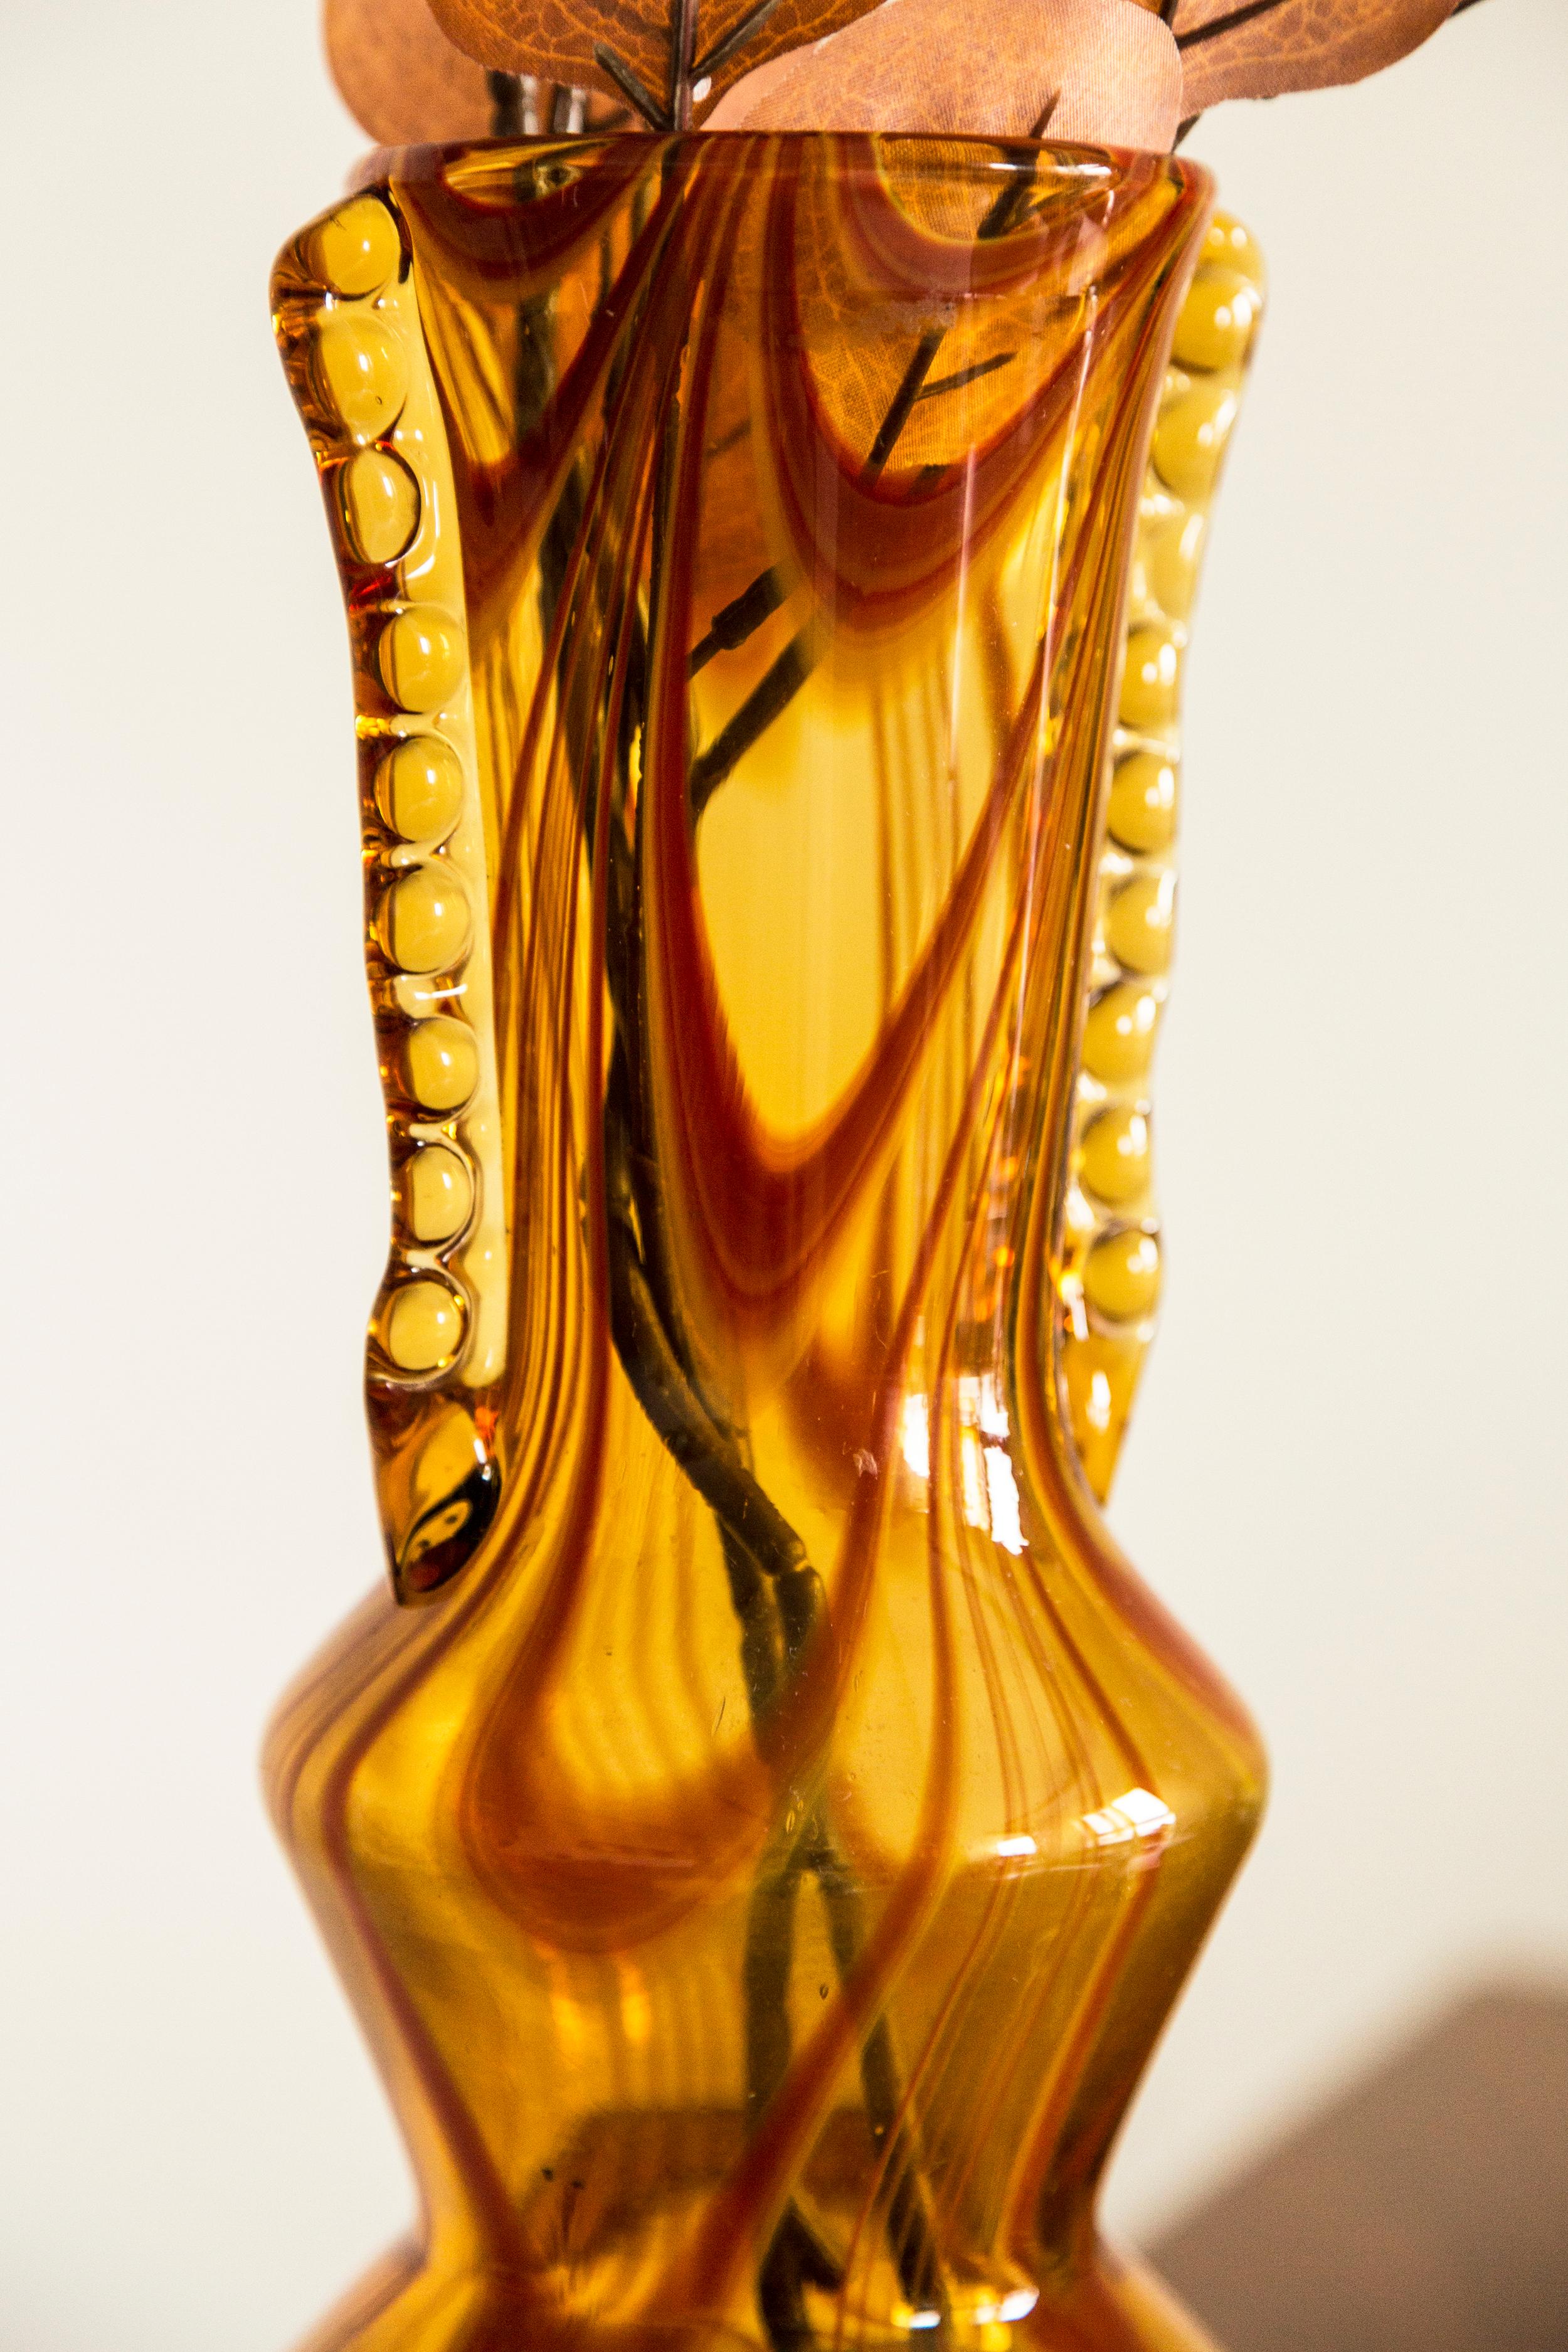 Czech Midcentury Vintage Yellow and Orange Vase, Europe, 1960s For Sale